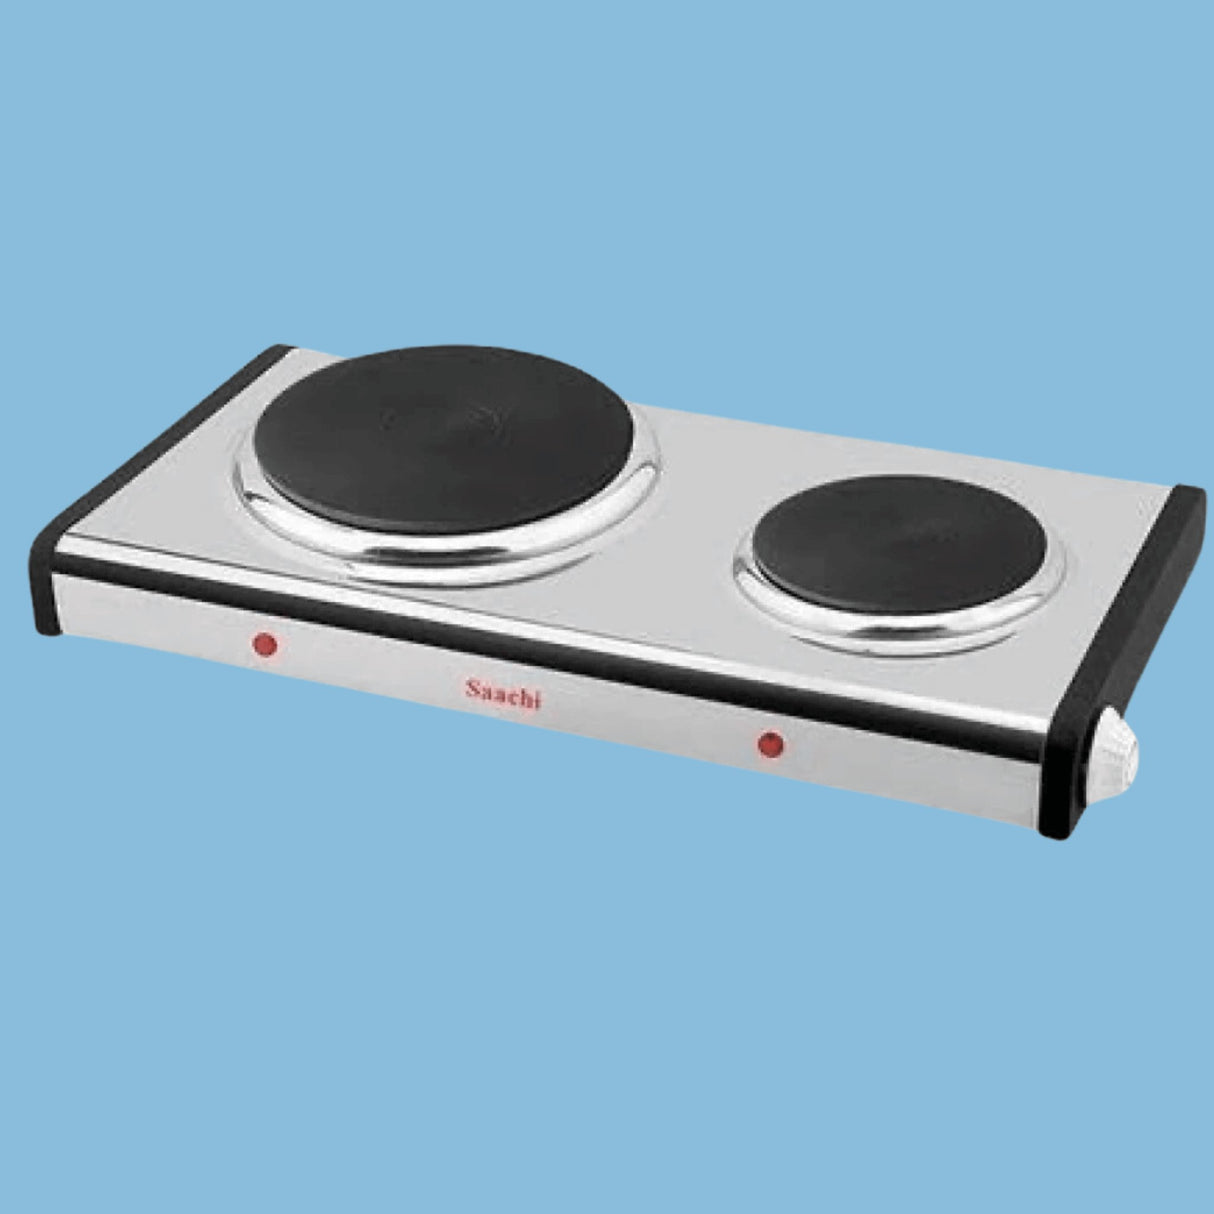 Saachi NL-HP-6209 double hotplate electric cooker /burner –white, black